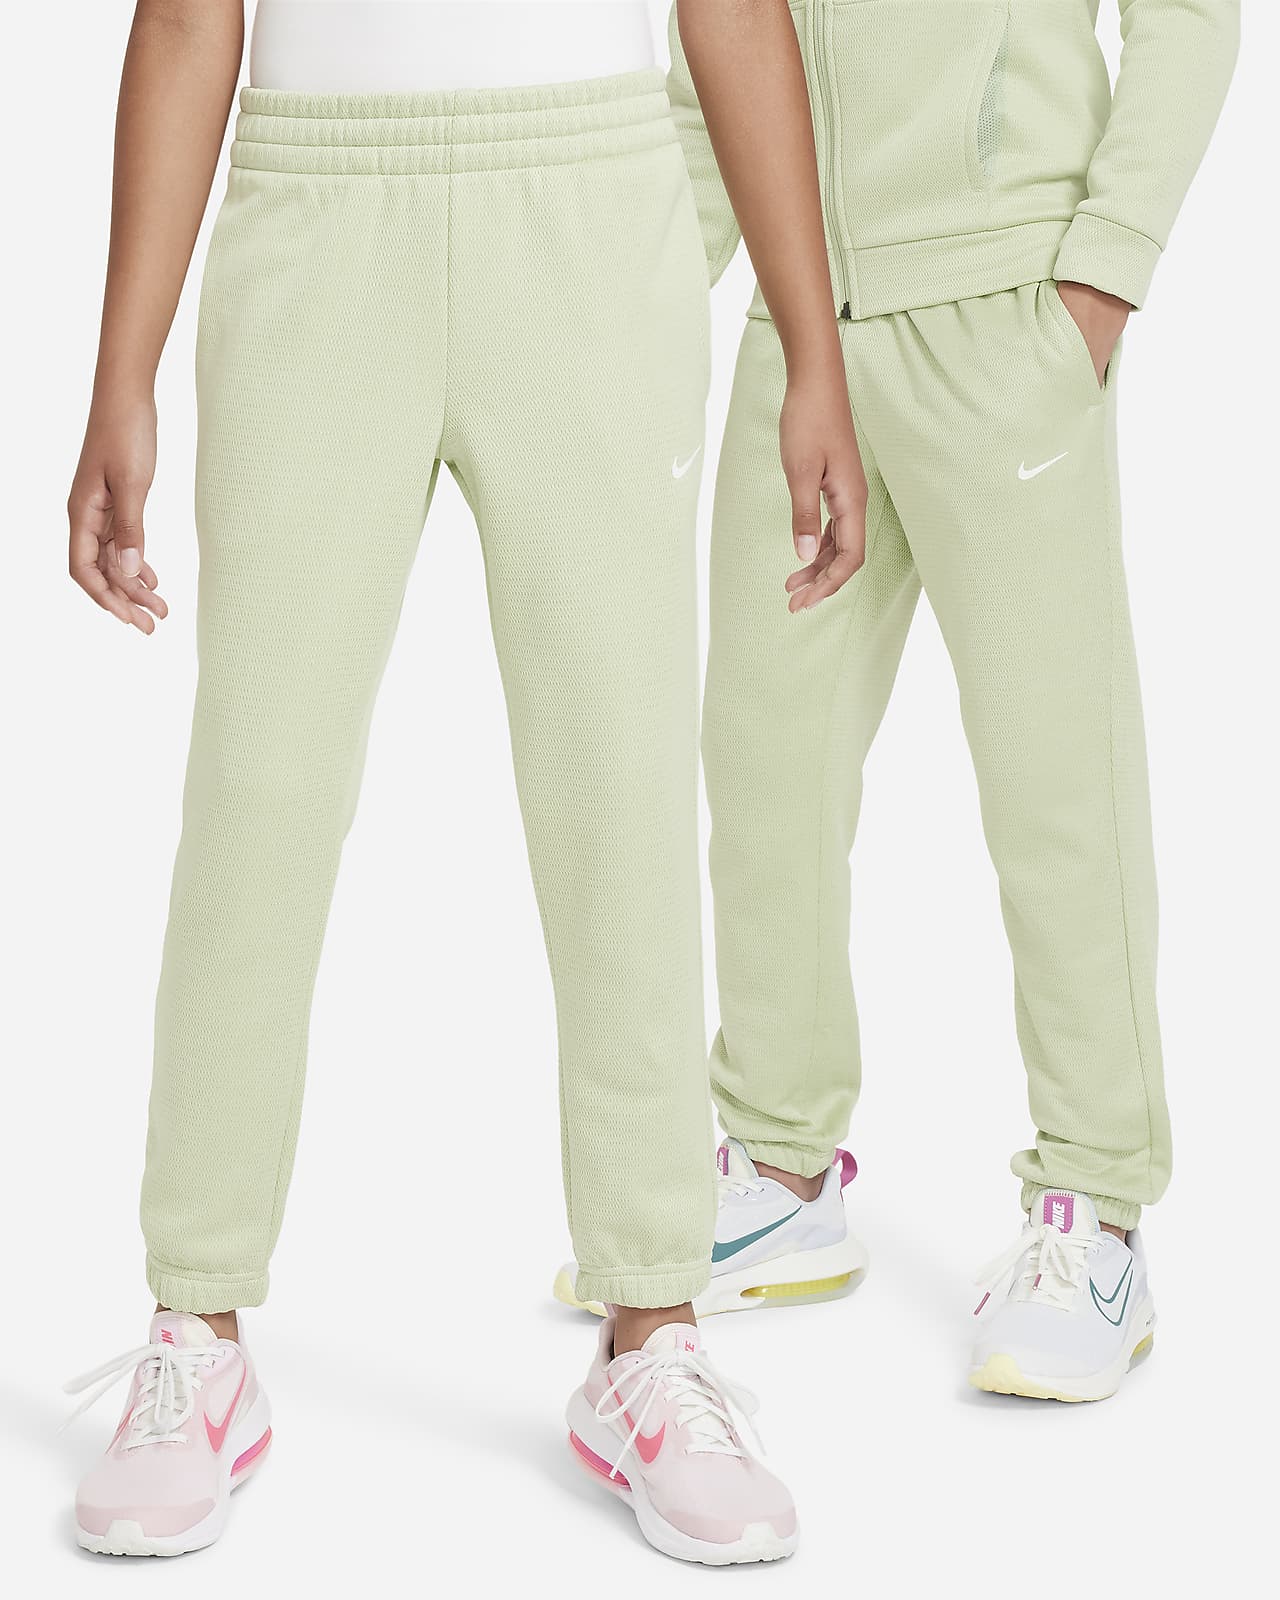 Nike Sportswear Therma-FIT Tech Pack Winterized Pants DQ4306-382 Men's  Size L